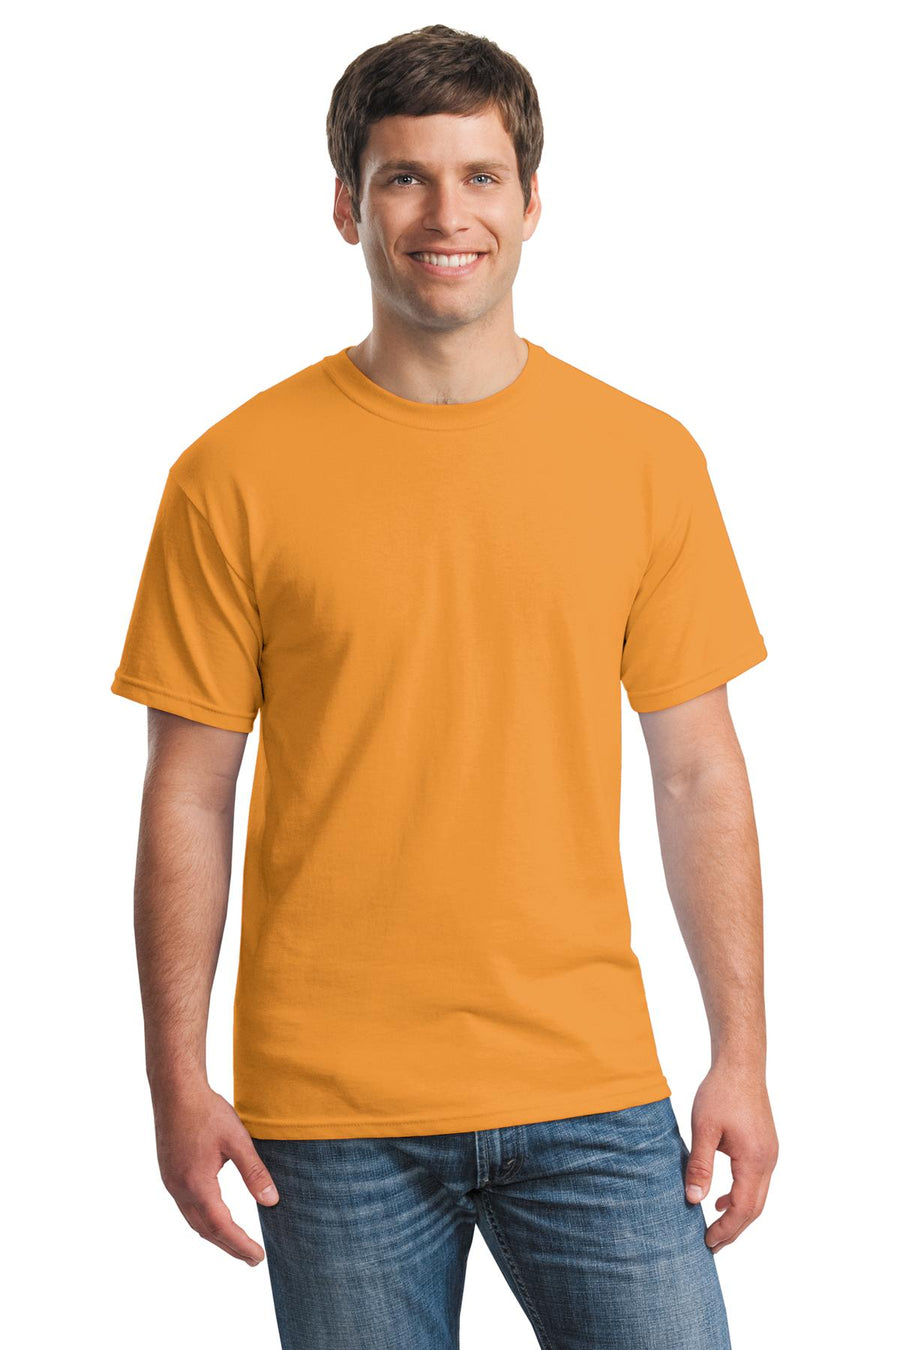 5000-Tennessee Orange-front_model